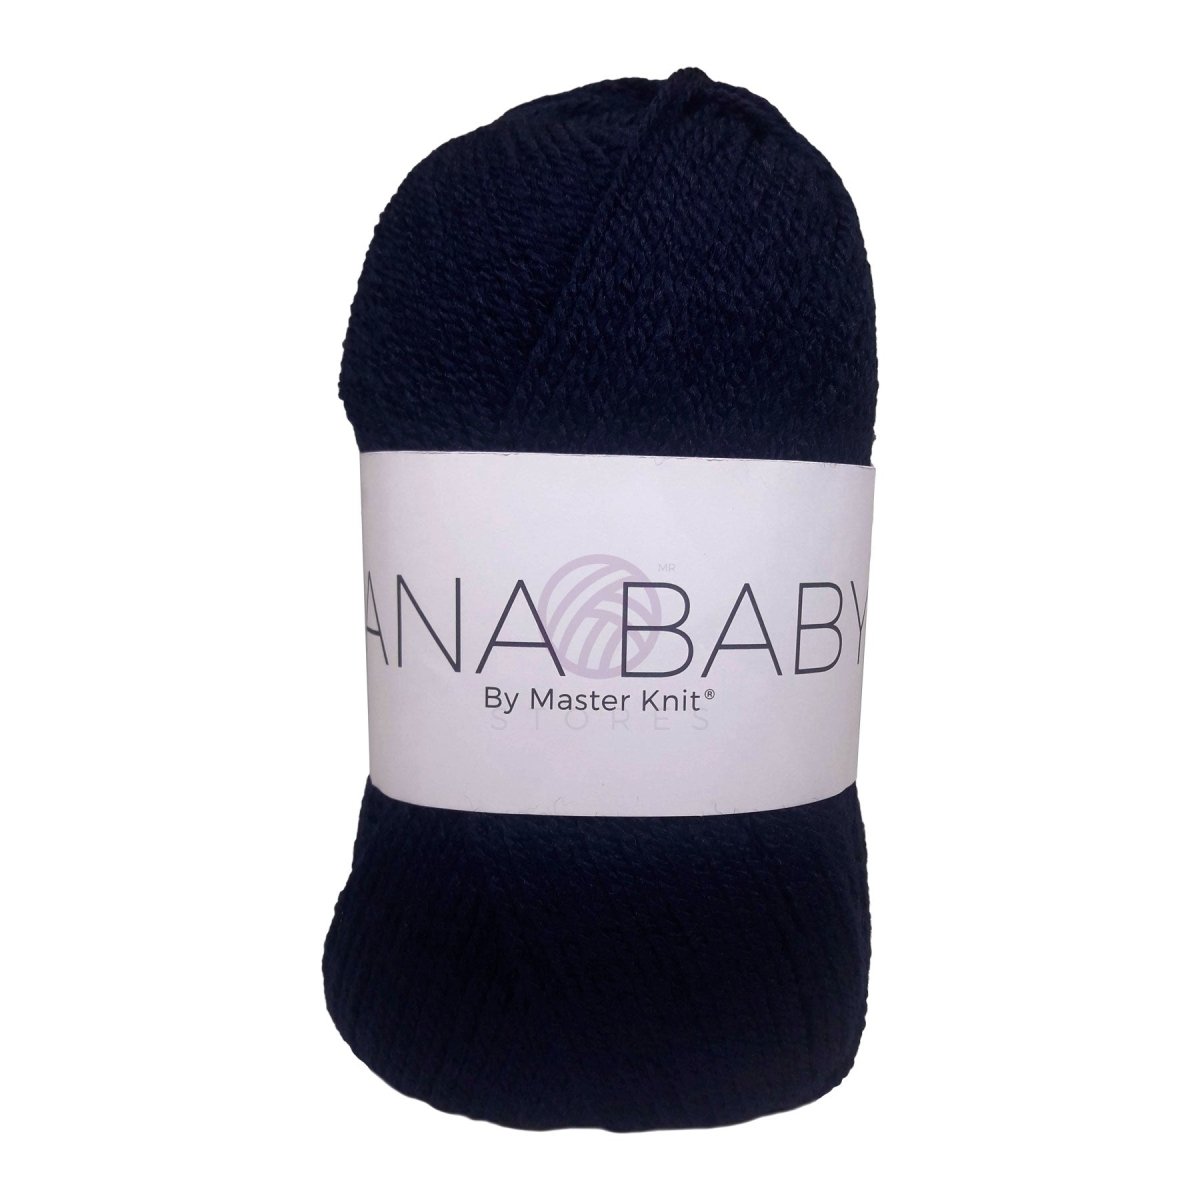 ANA BABY - Crochetstores9170-632